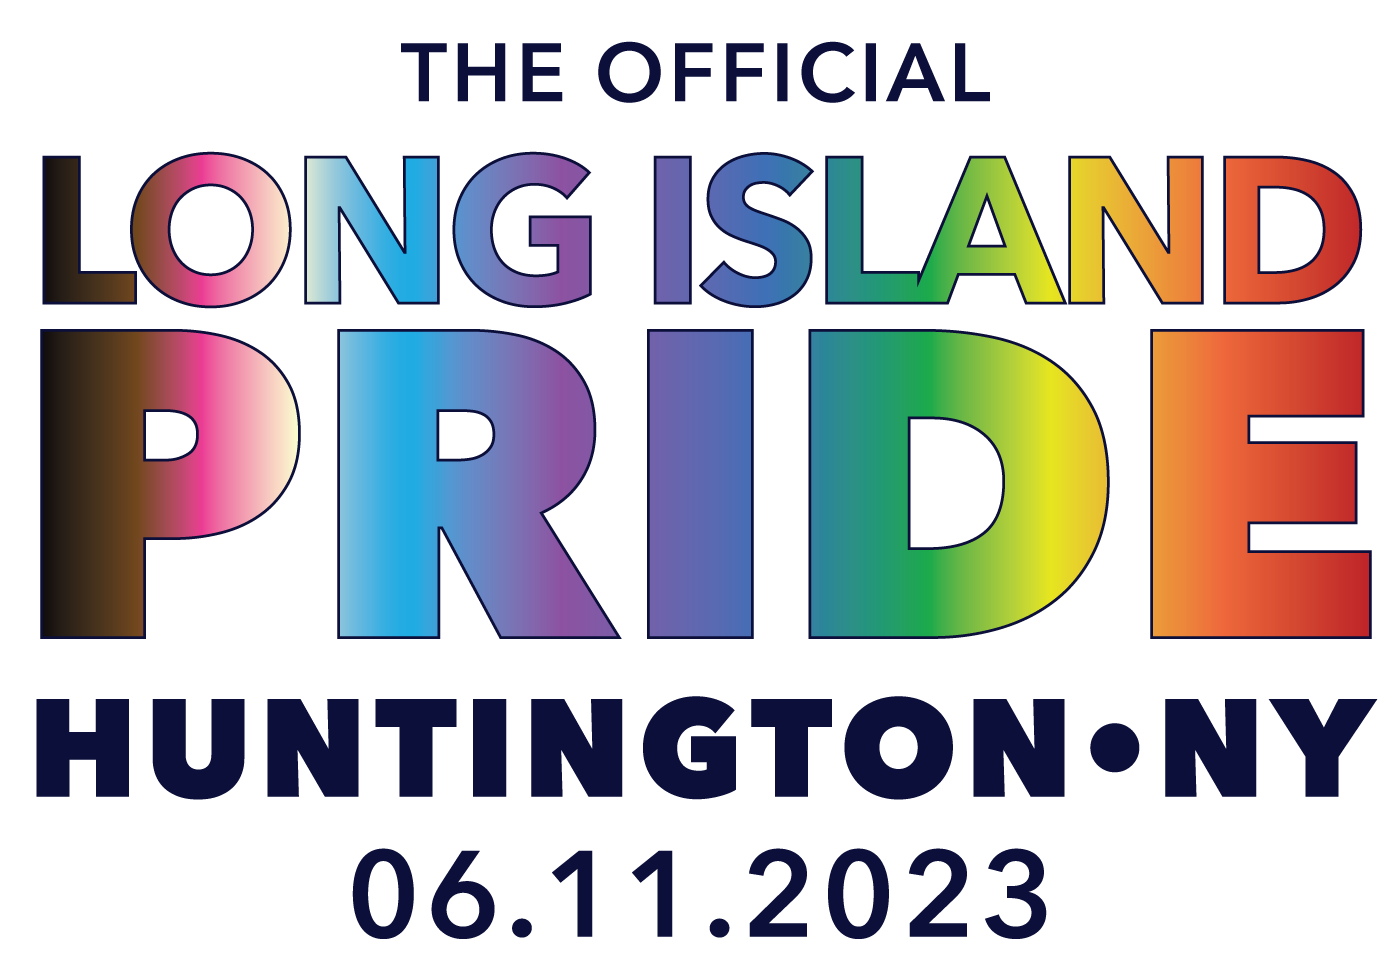 Long Island Pride